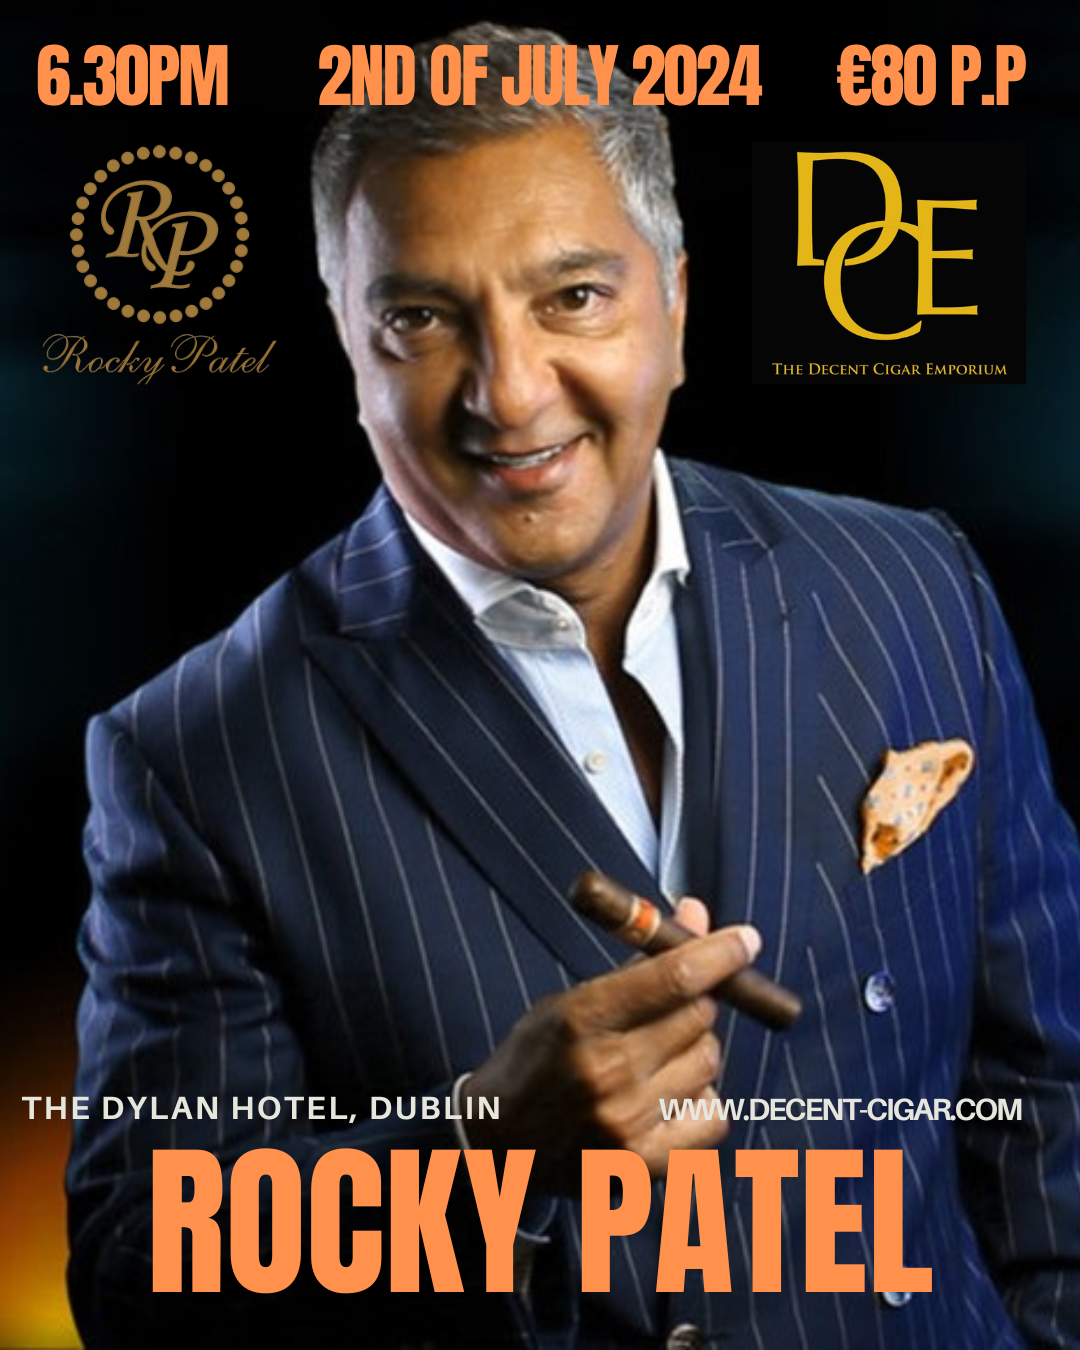 Decent Cigar Event - Rocky Patel 2nd of July 2024